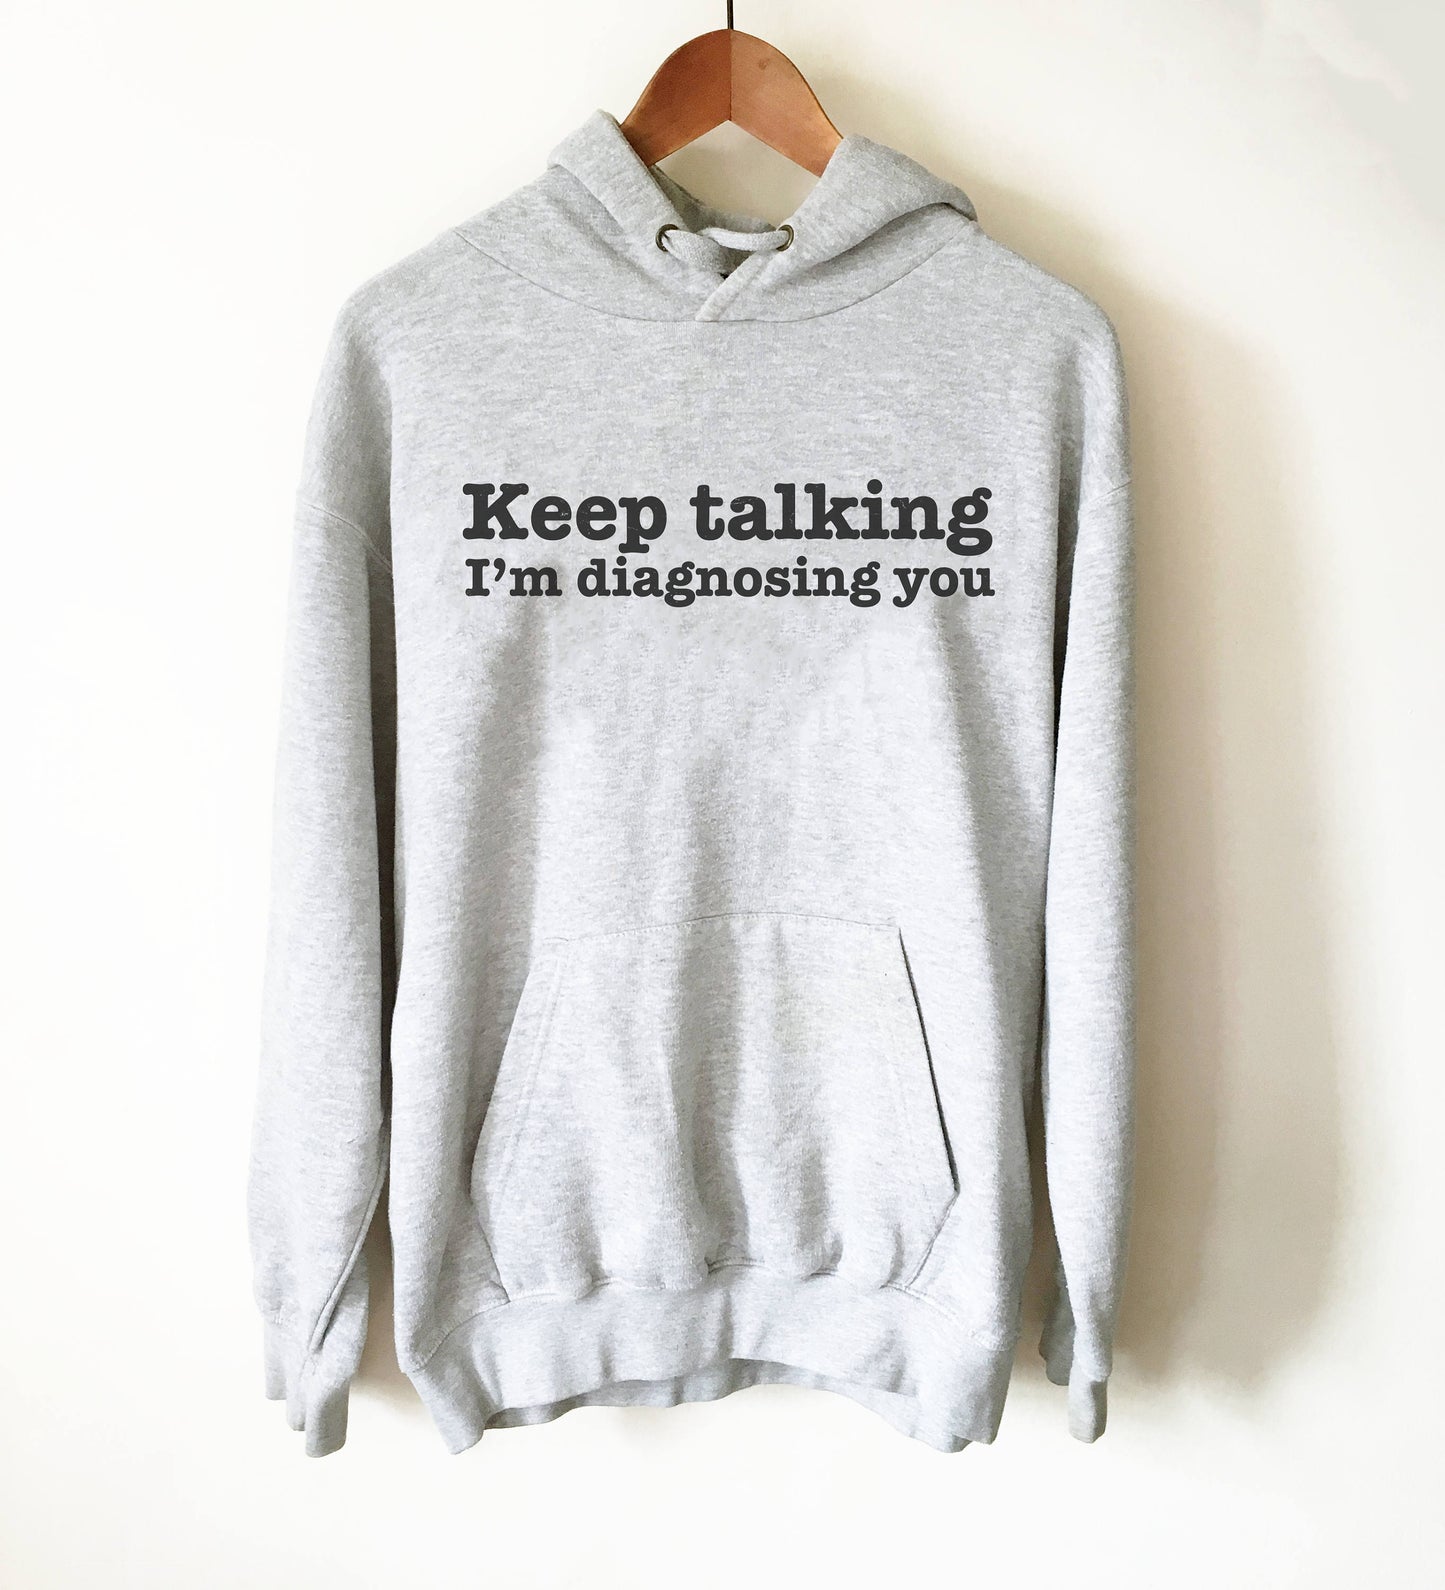 Keep Talking I'm Diagnosing You Hoodie - Psychologist gift, Psychologist t-shirt, Psychology shirt, psychiatrist shirt, Doctor shirt